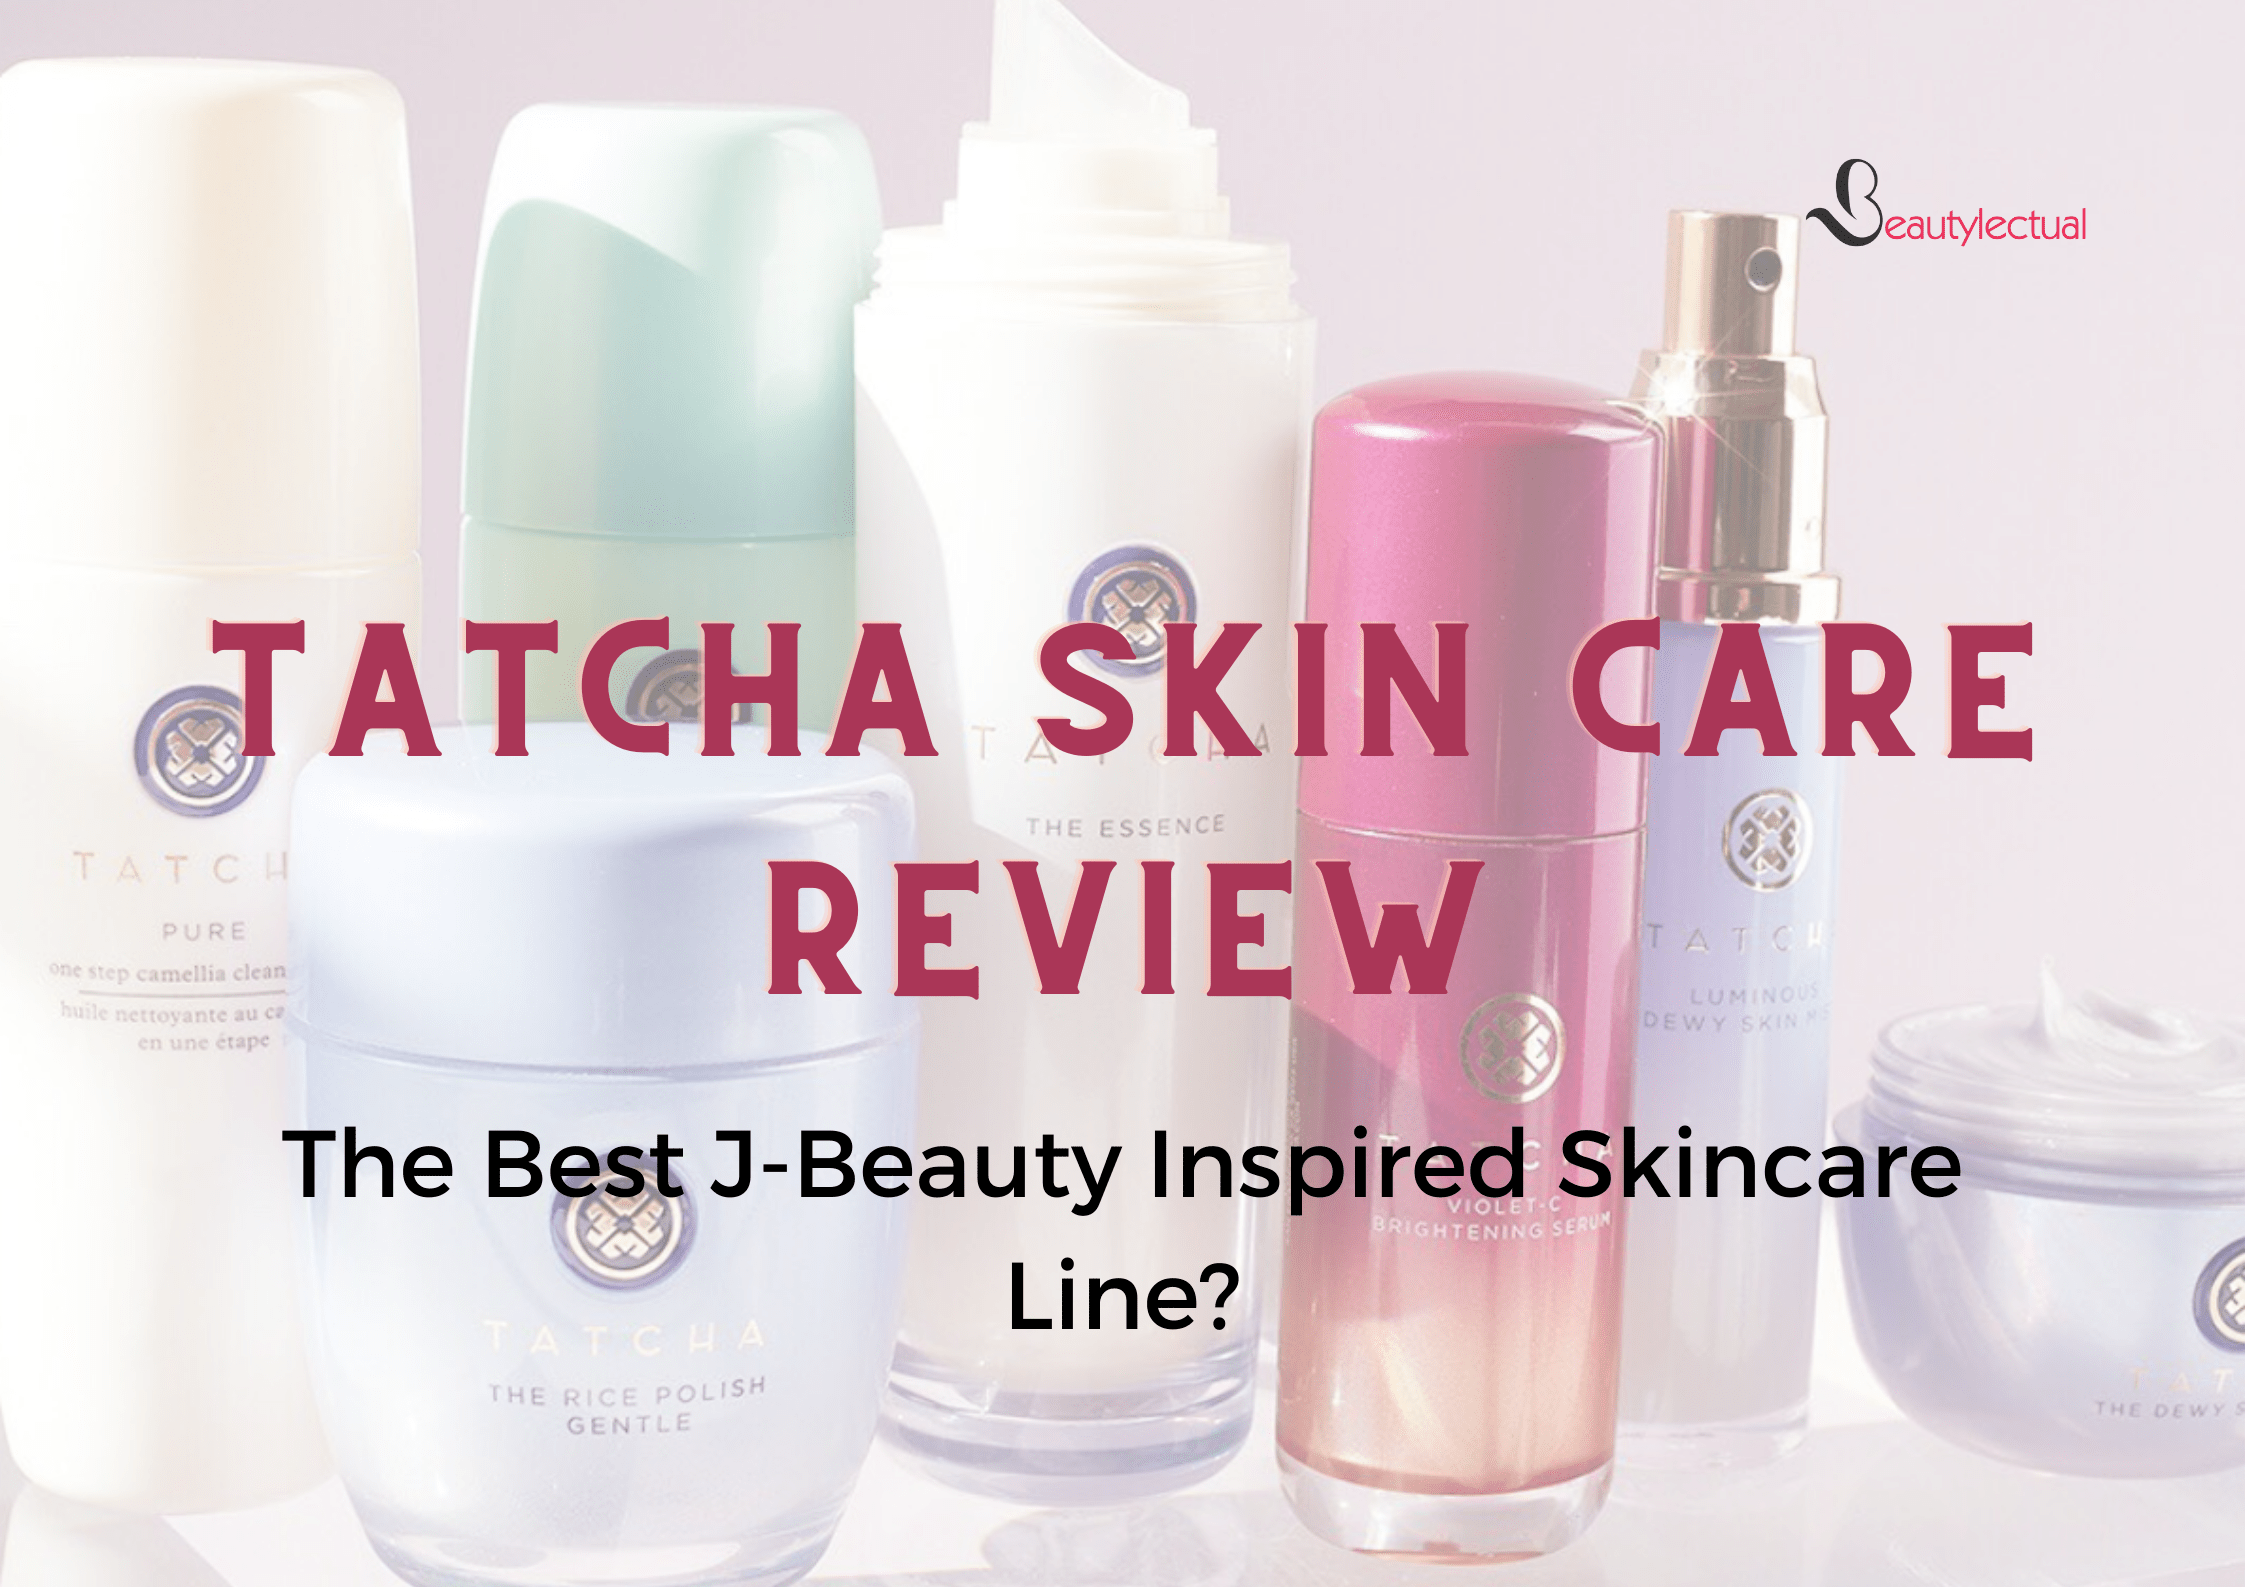 Tatcha Skin Care Review